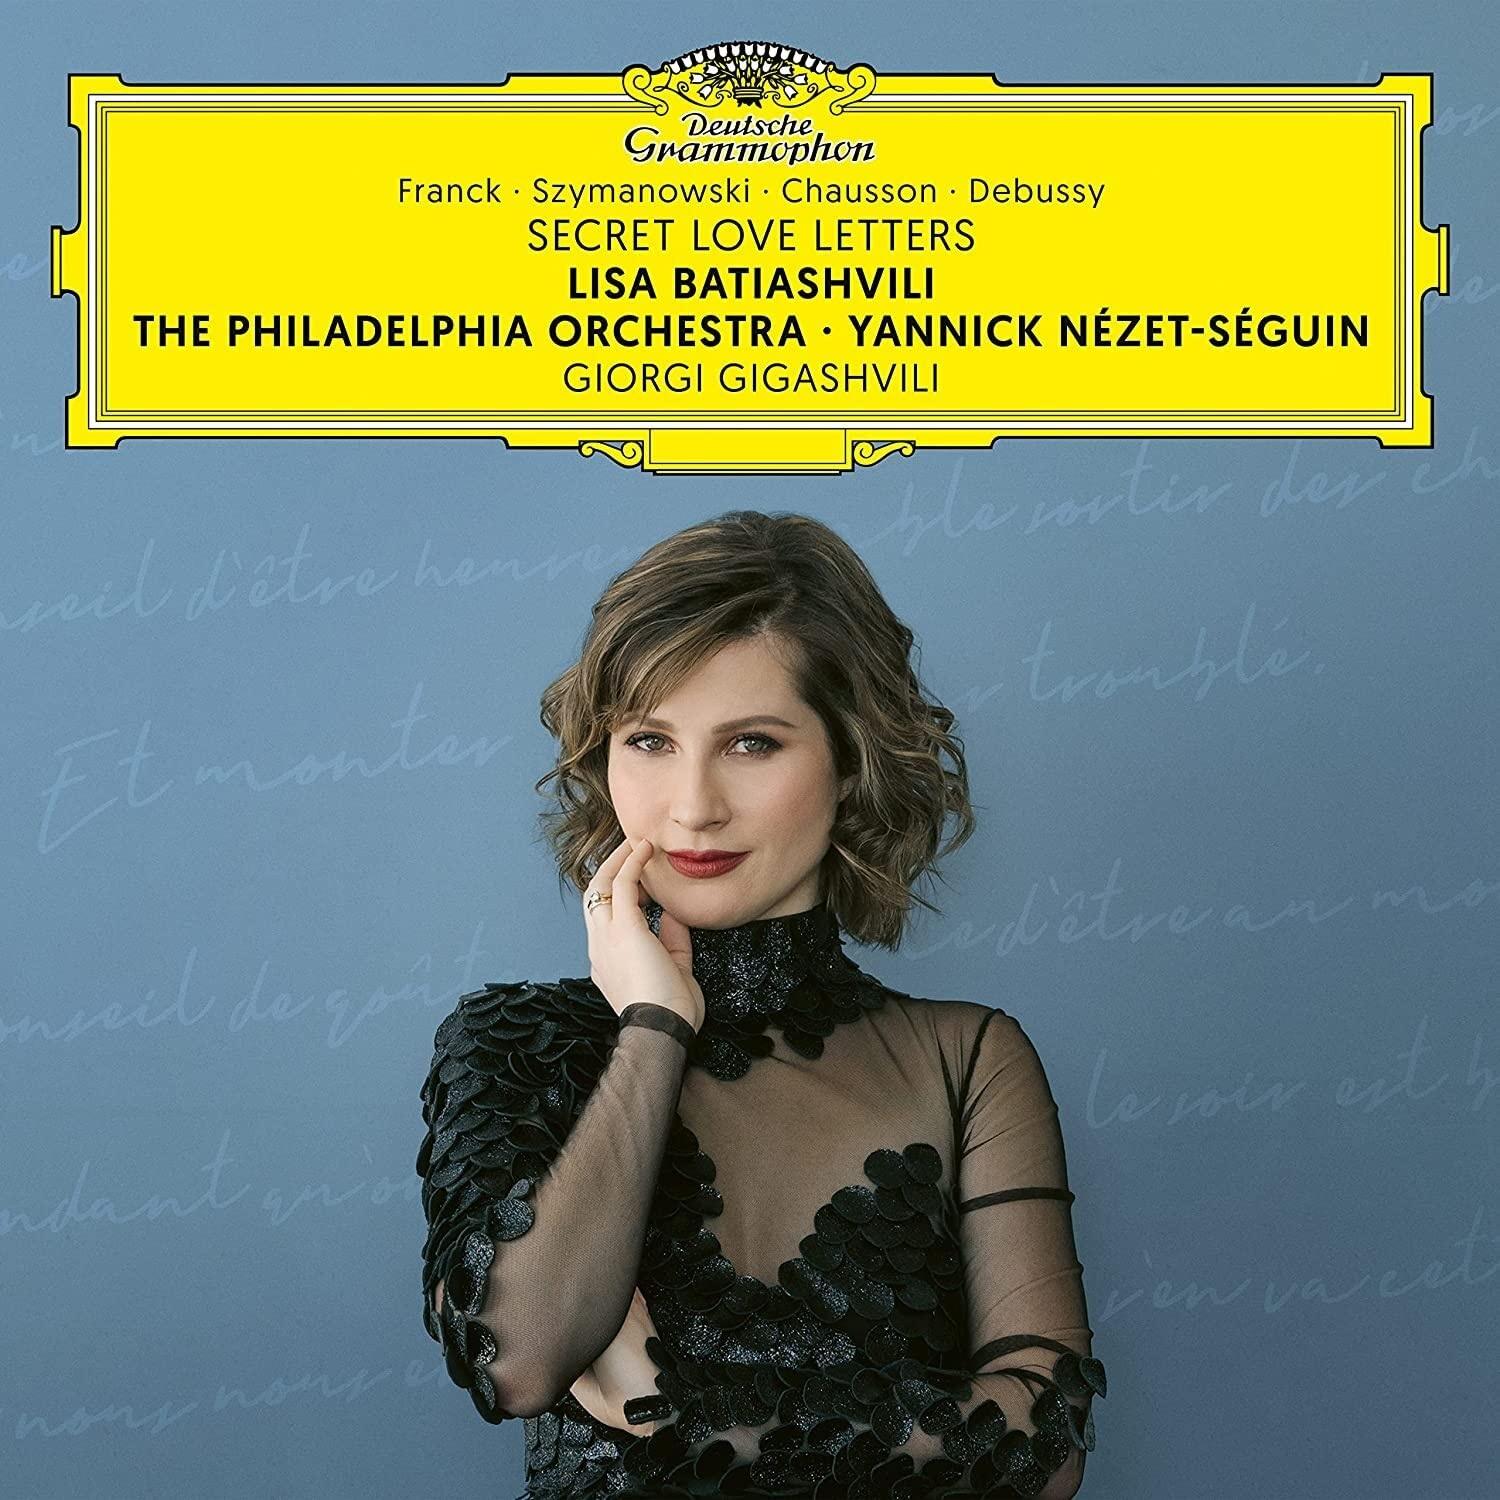 Secret Love Letters – Lisa Batiashvili, vl; Philadelphia Orchestra, Yannick Nézet-Séguin